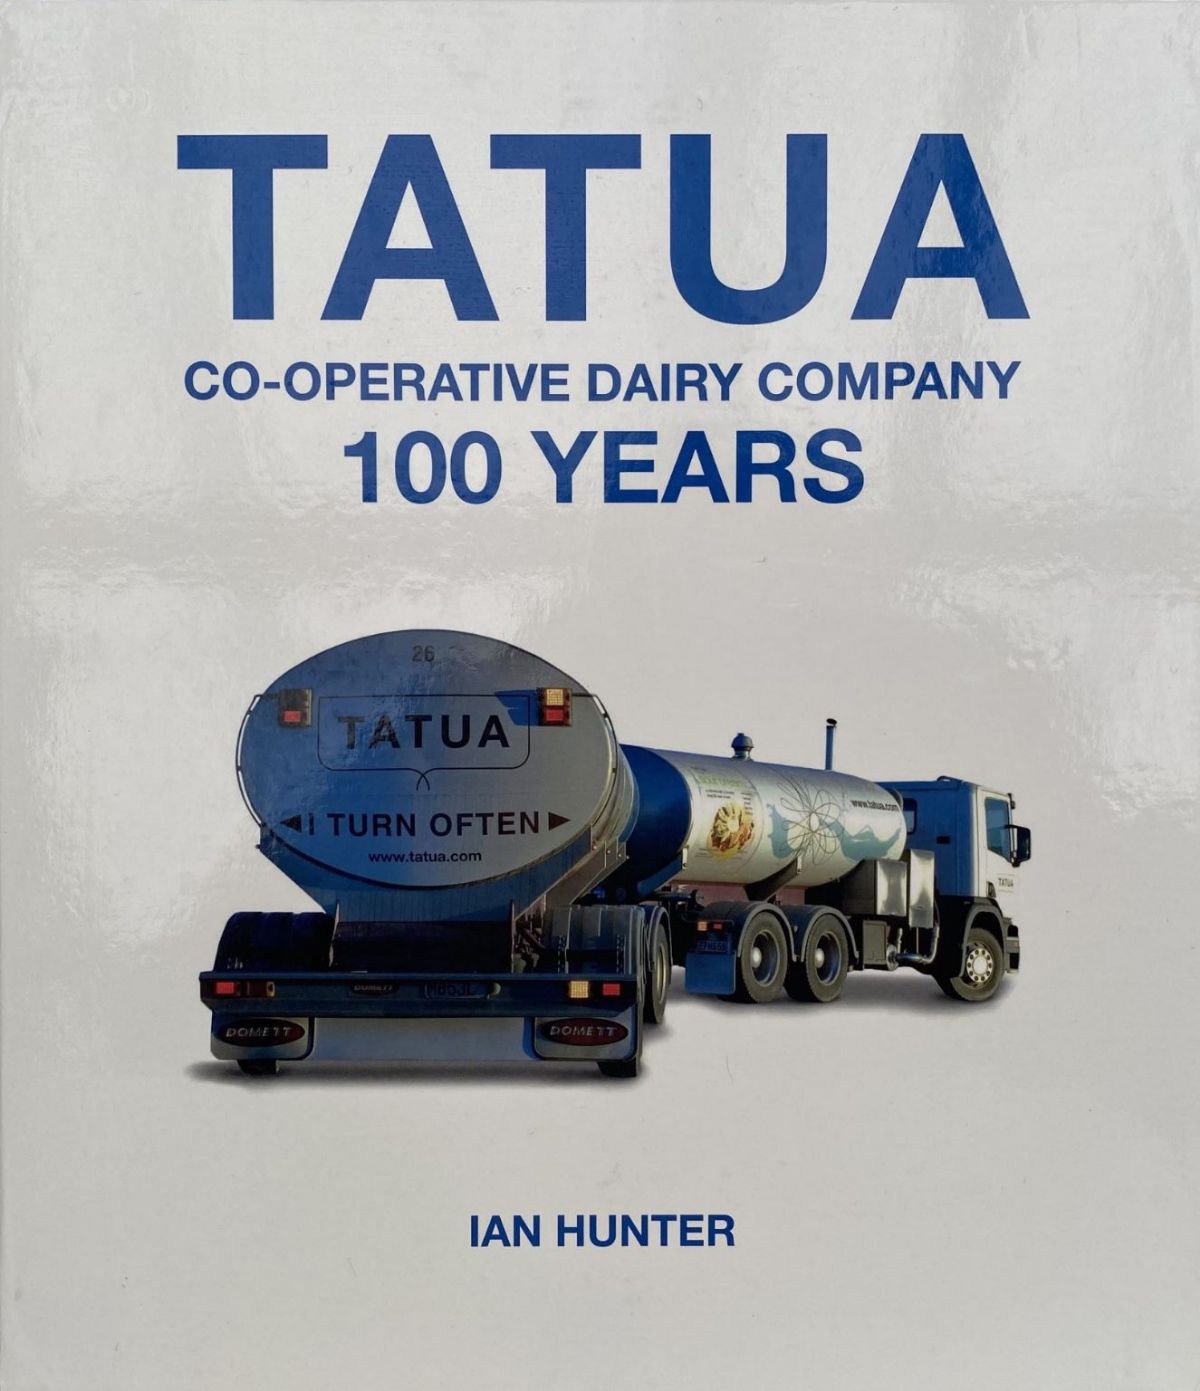 TATUA Co-operative Dairy Company - 100 Years